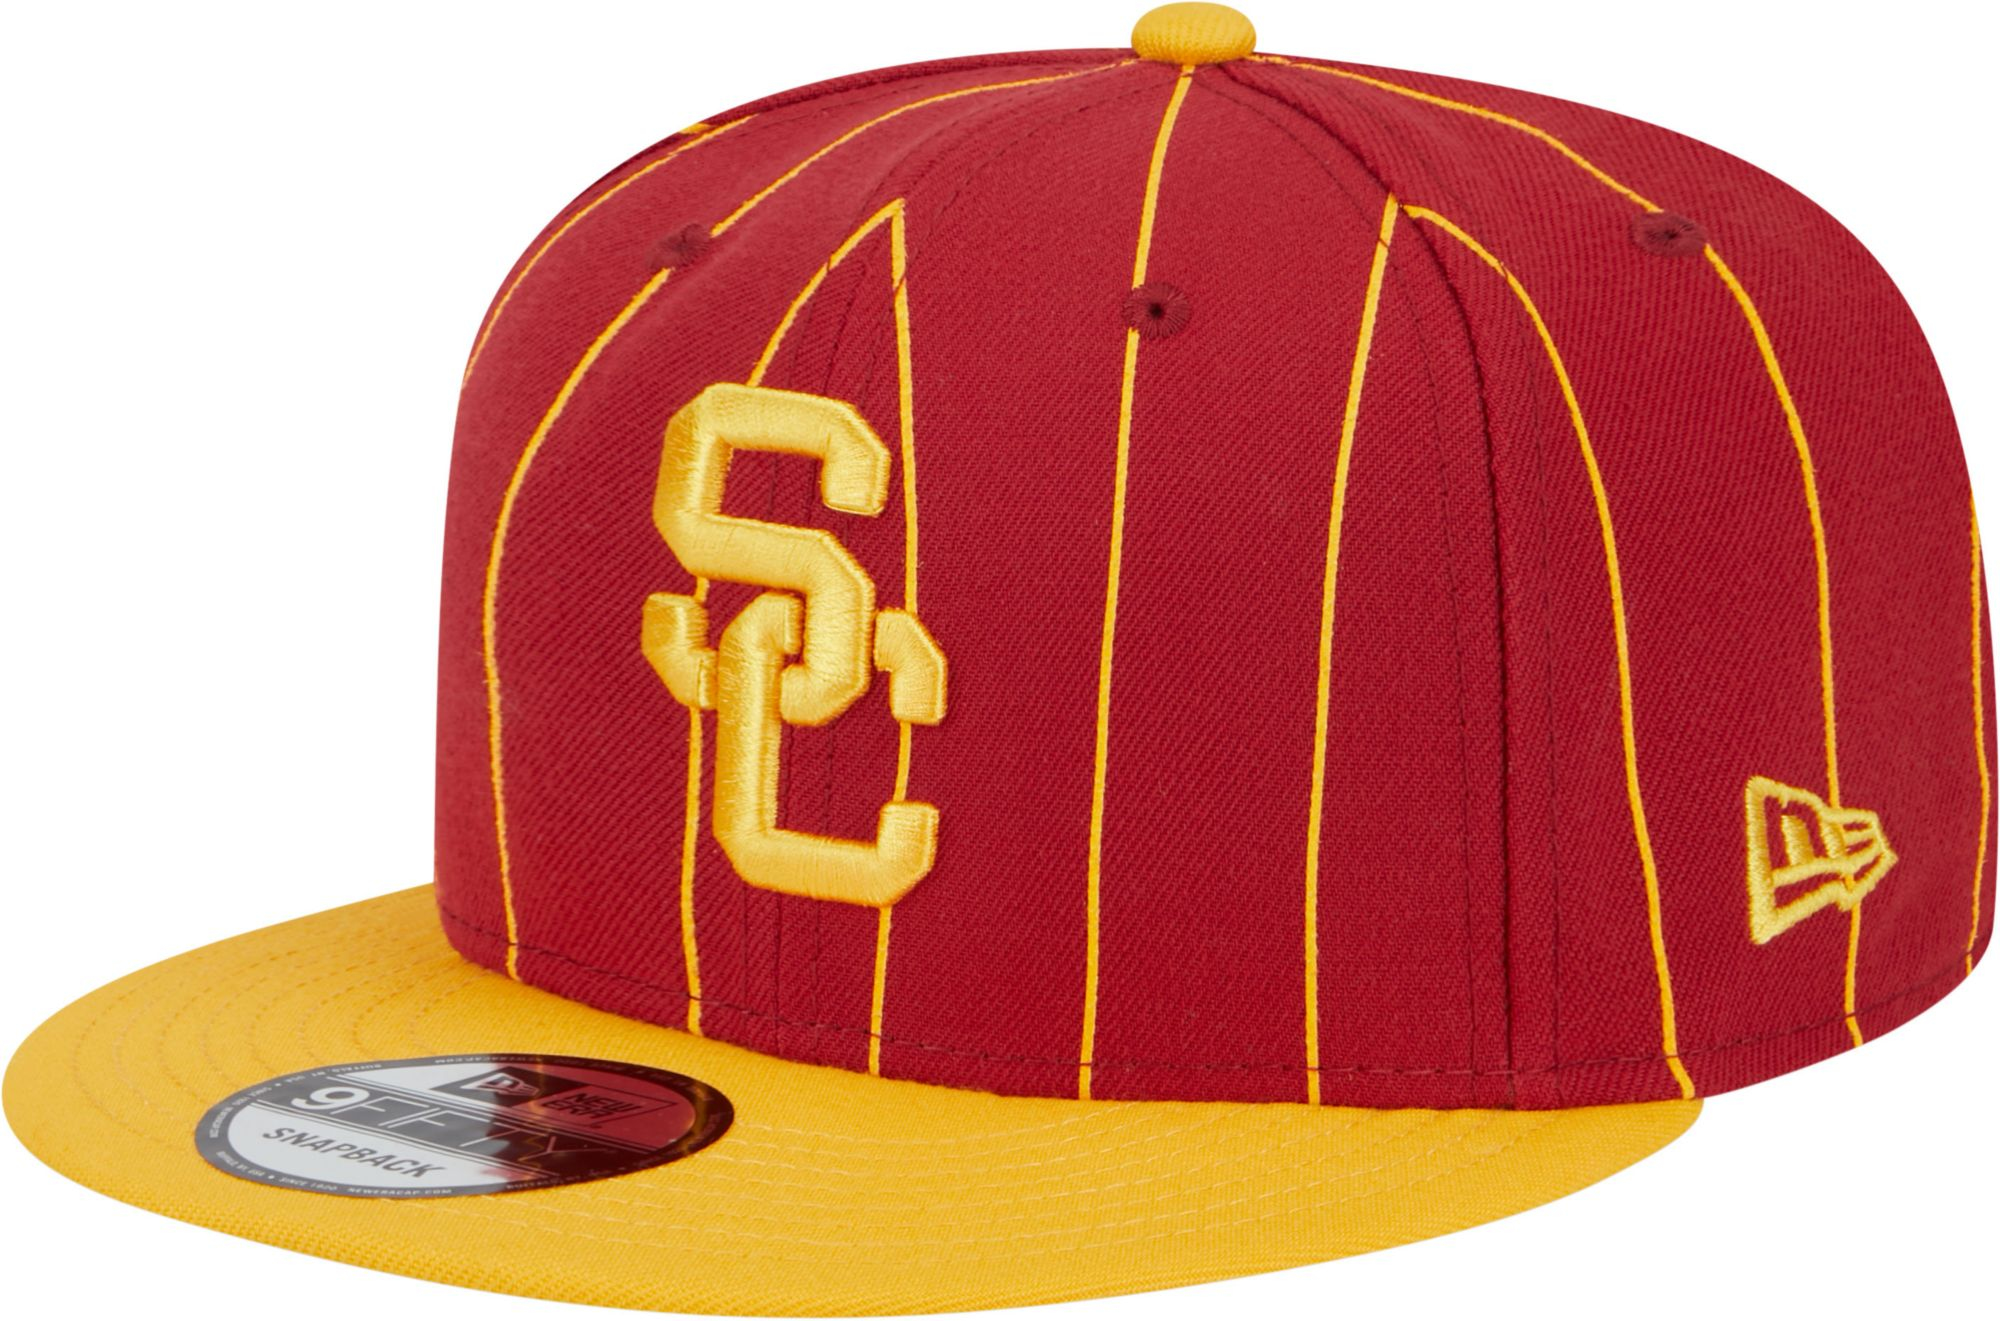 New Era Men's USC Trojans Cardinal 9Fifty Vintage Adjustable Hat, Red